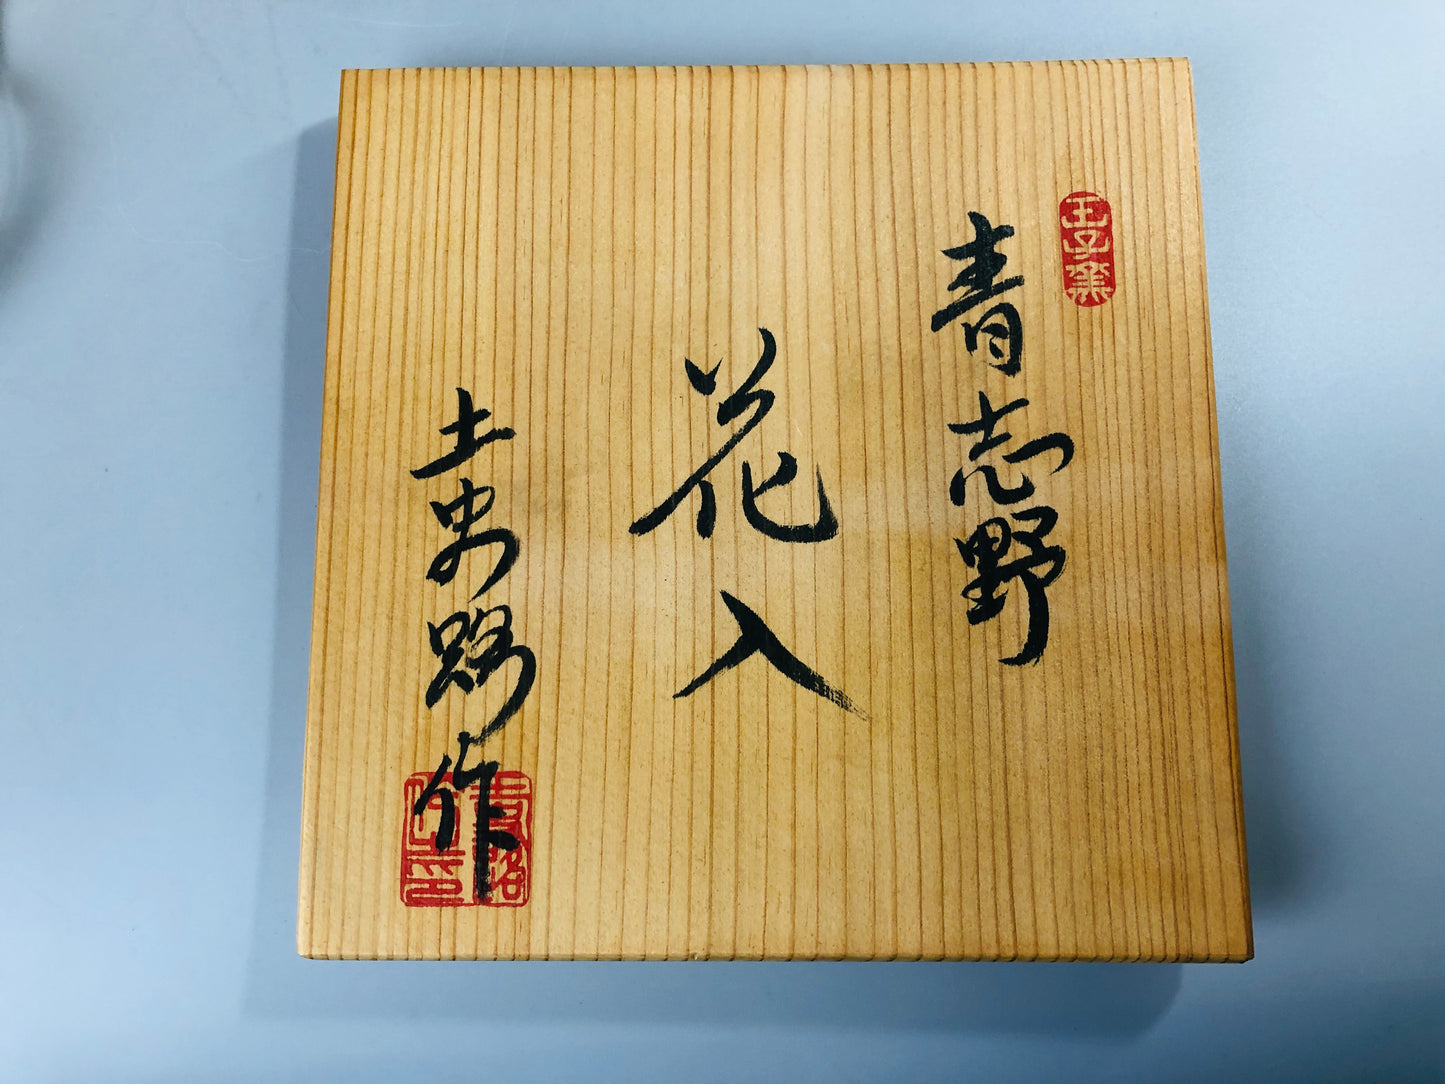 Y6941 [VIDEO] FLOWER VASE Shino-ware Aoshino signed box Japan ikebana floral arrangement